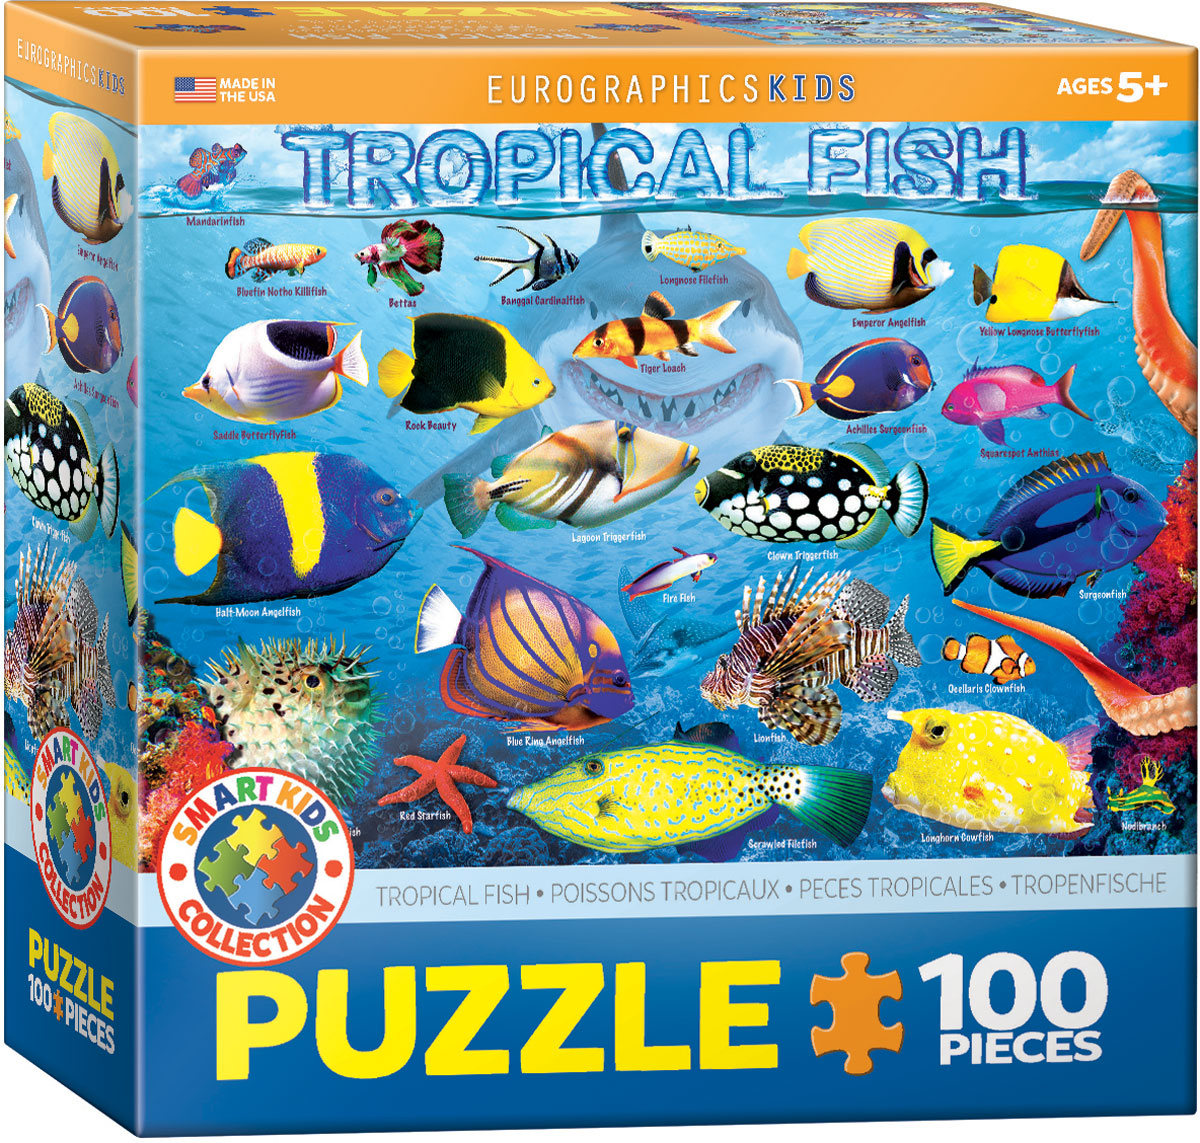 Puzzle XXL Pieces - Fishing Boat Grafika-Kids-00569 12 pieces Jigsaw  Puzzles - Boats - Jigsaw Puzzle